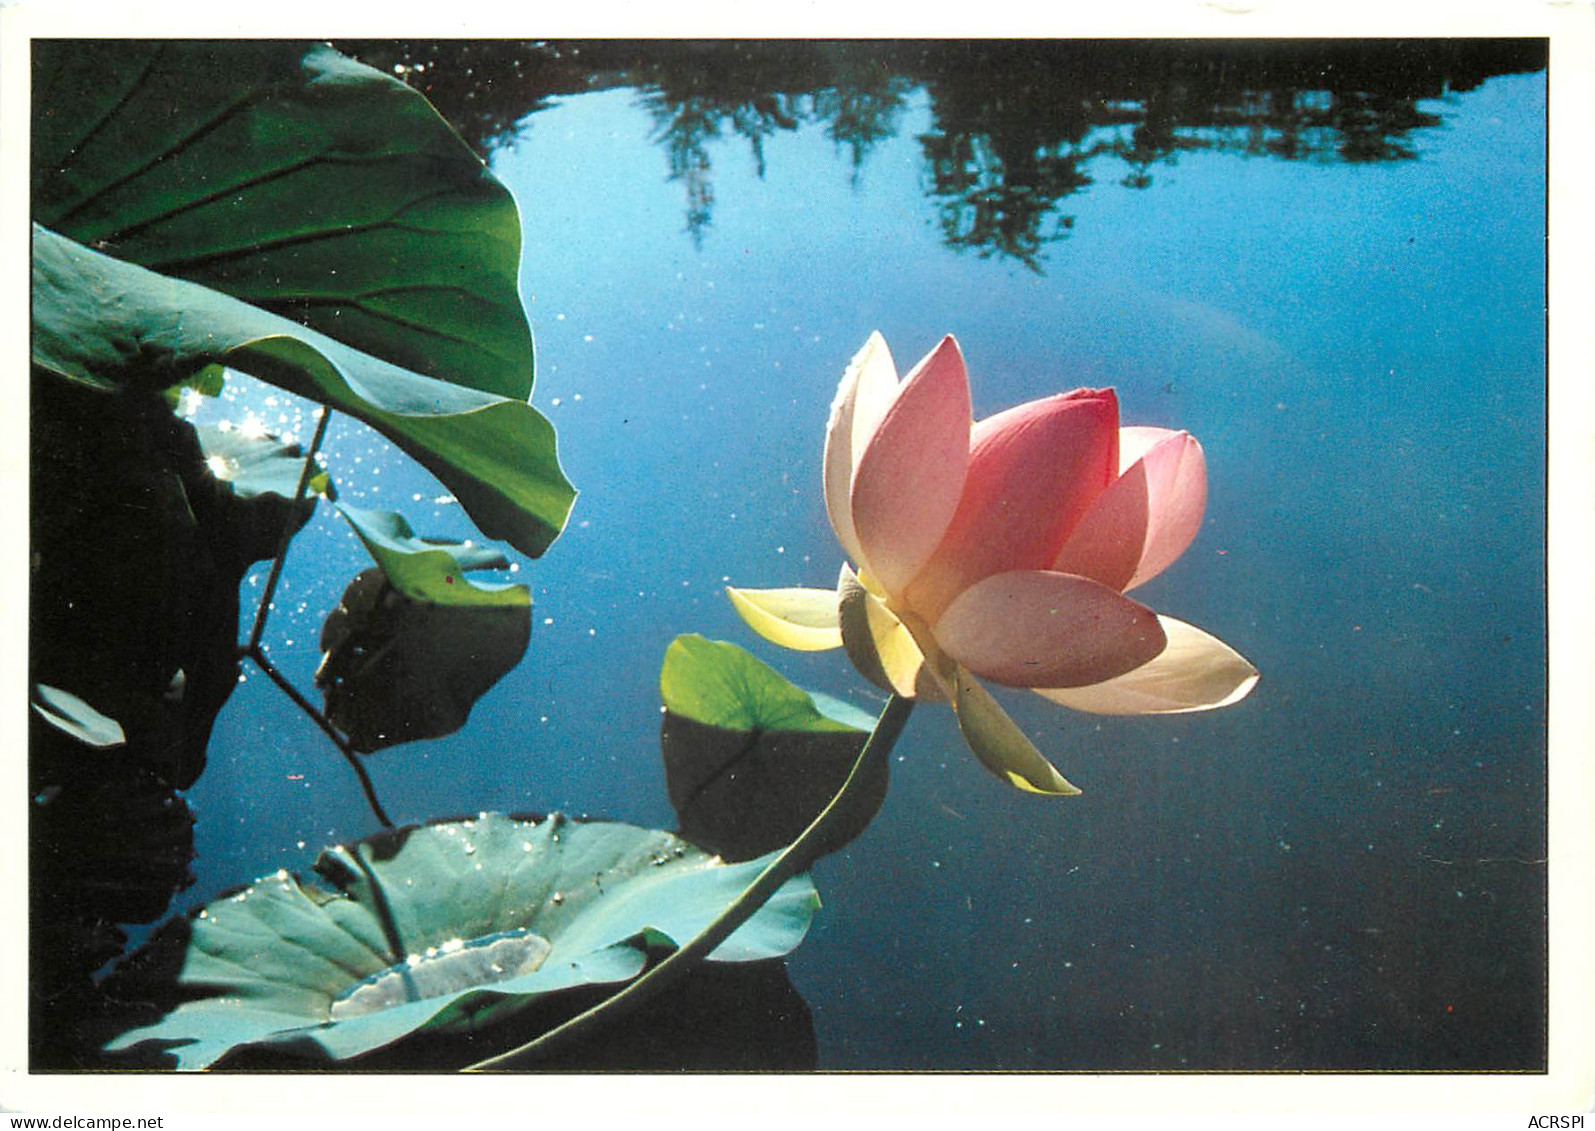 BAMBUSERAIE DE PRAFRANCE GENERARGUES ANDUZE Fleur De Lotus 2 30(scan Recto-verso) MD2539 - Anduze